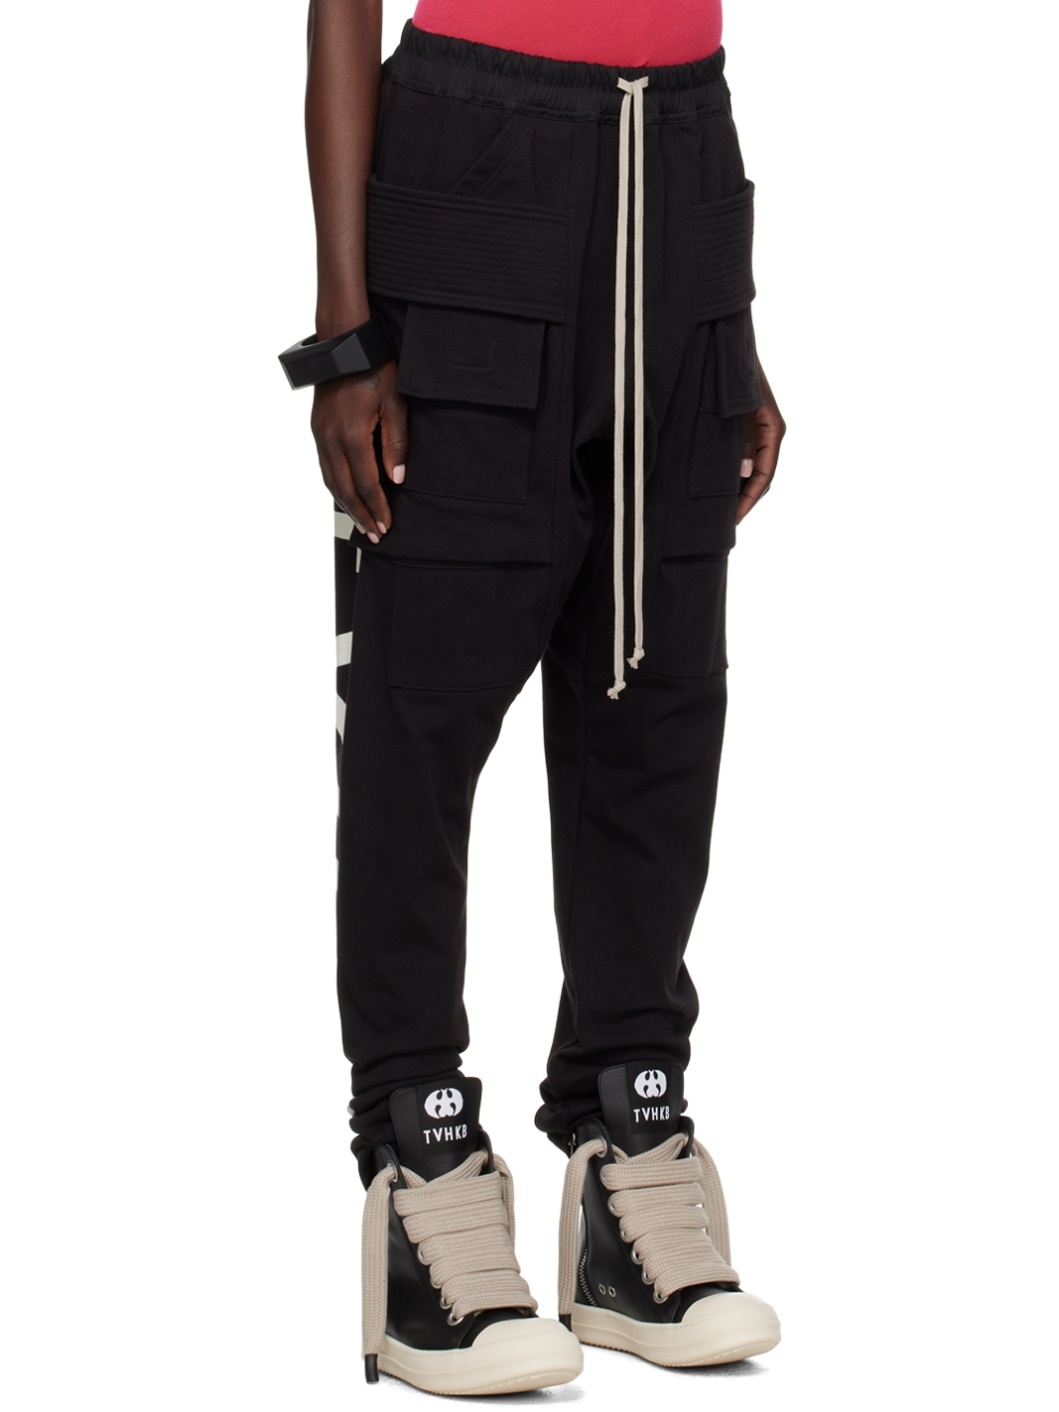 SSENSE Exclusive Black KEMBRA PFAHLER Edition Creatch Trousers - 2